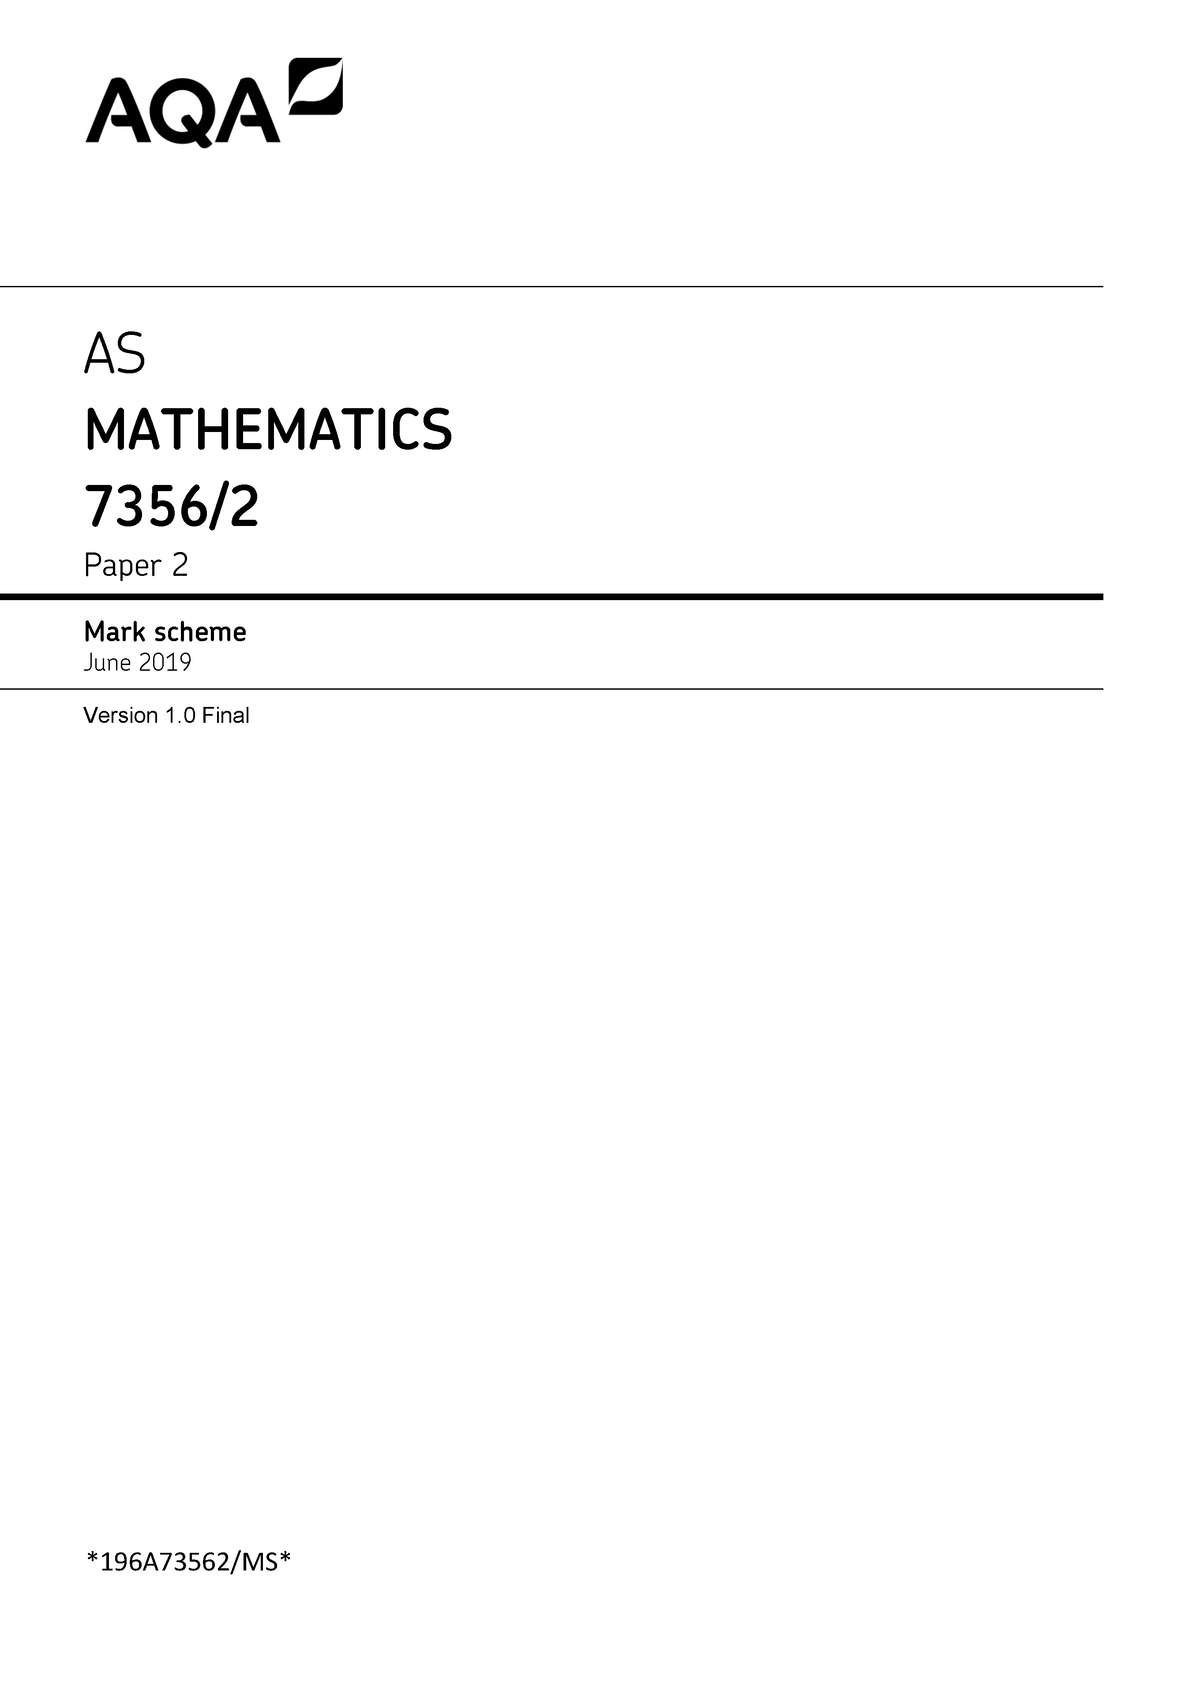 may-19-as-maths-paper-2-ms-as-mathematics-7356-paper-2-mark-scheme